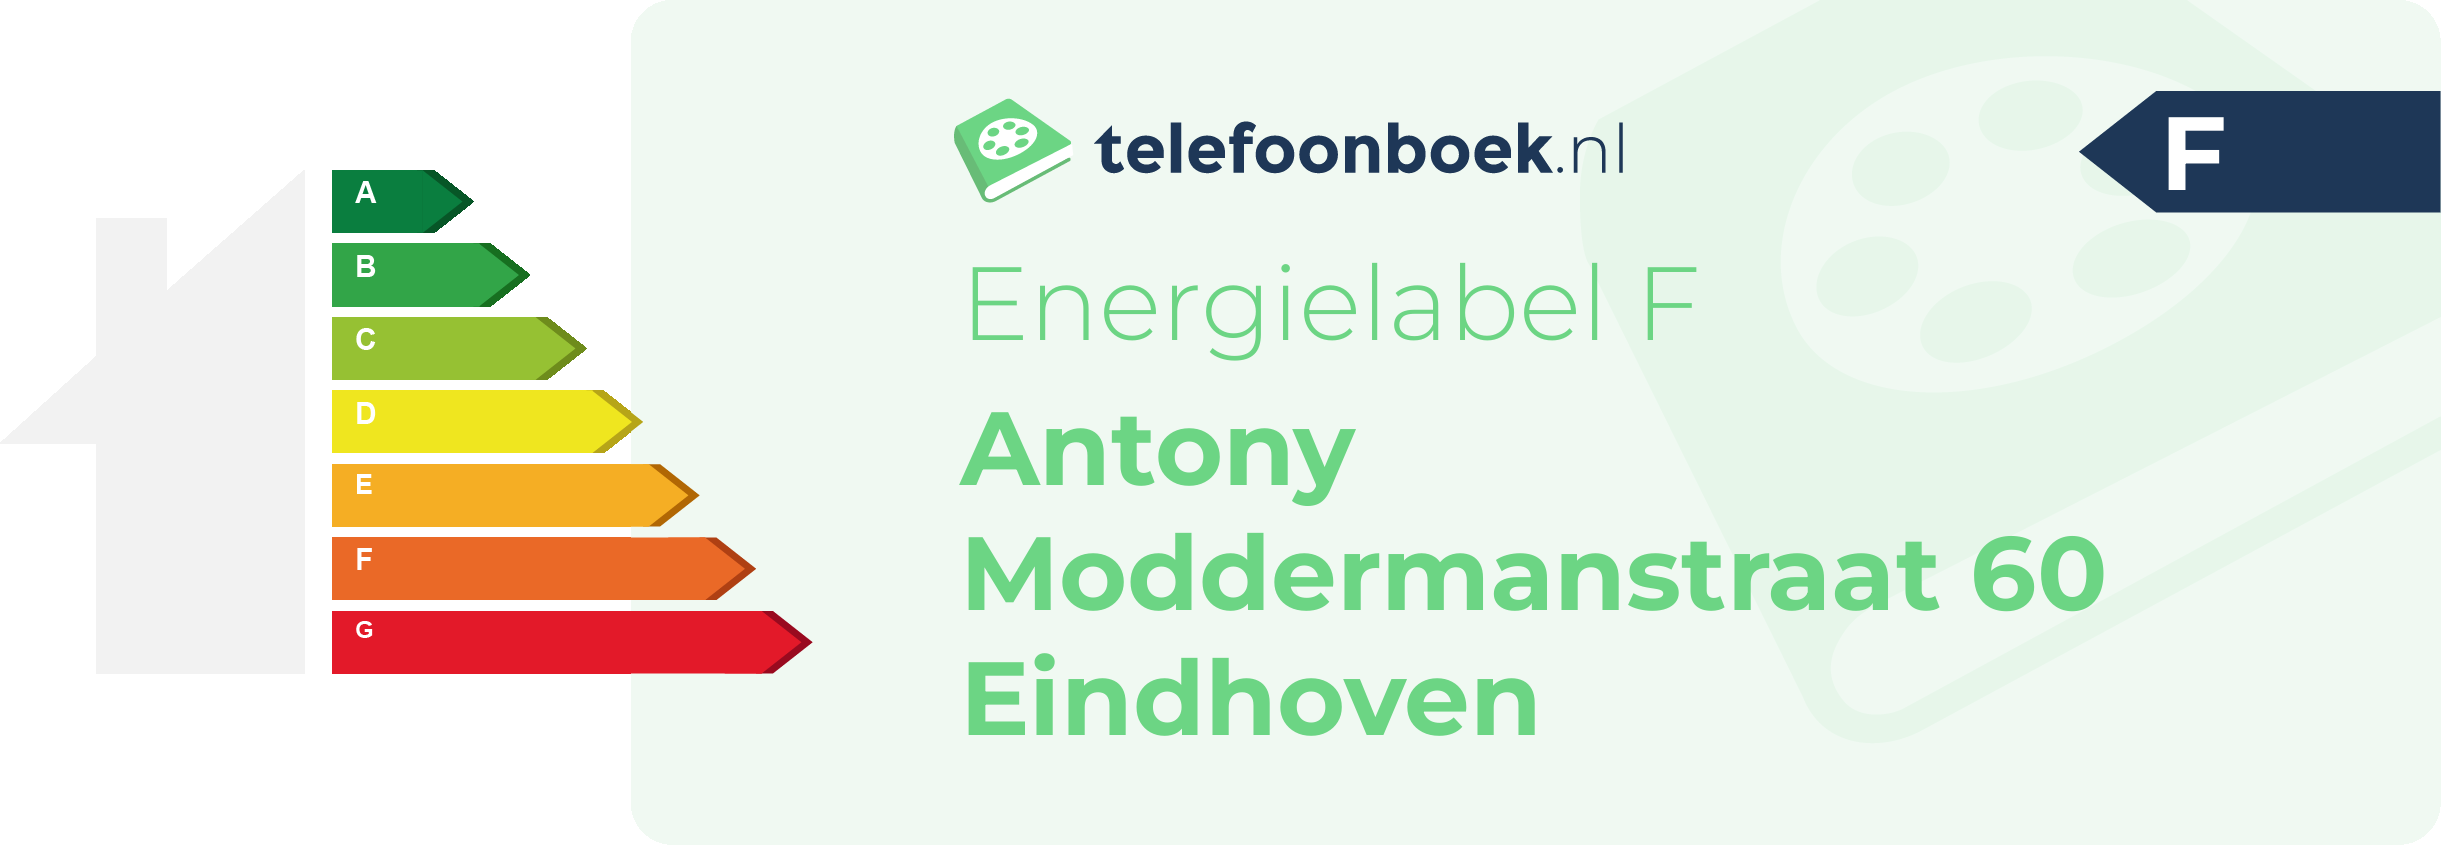 Energielabel Antony Moddermanstraat 60 Eindhoven